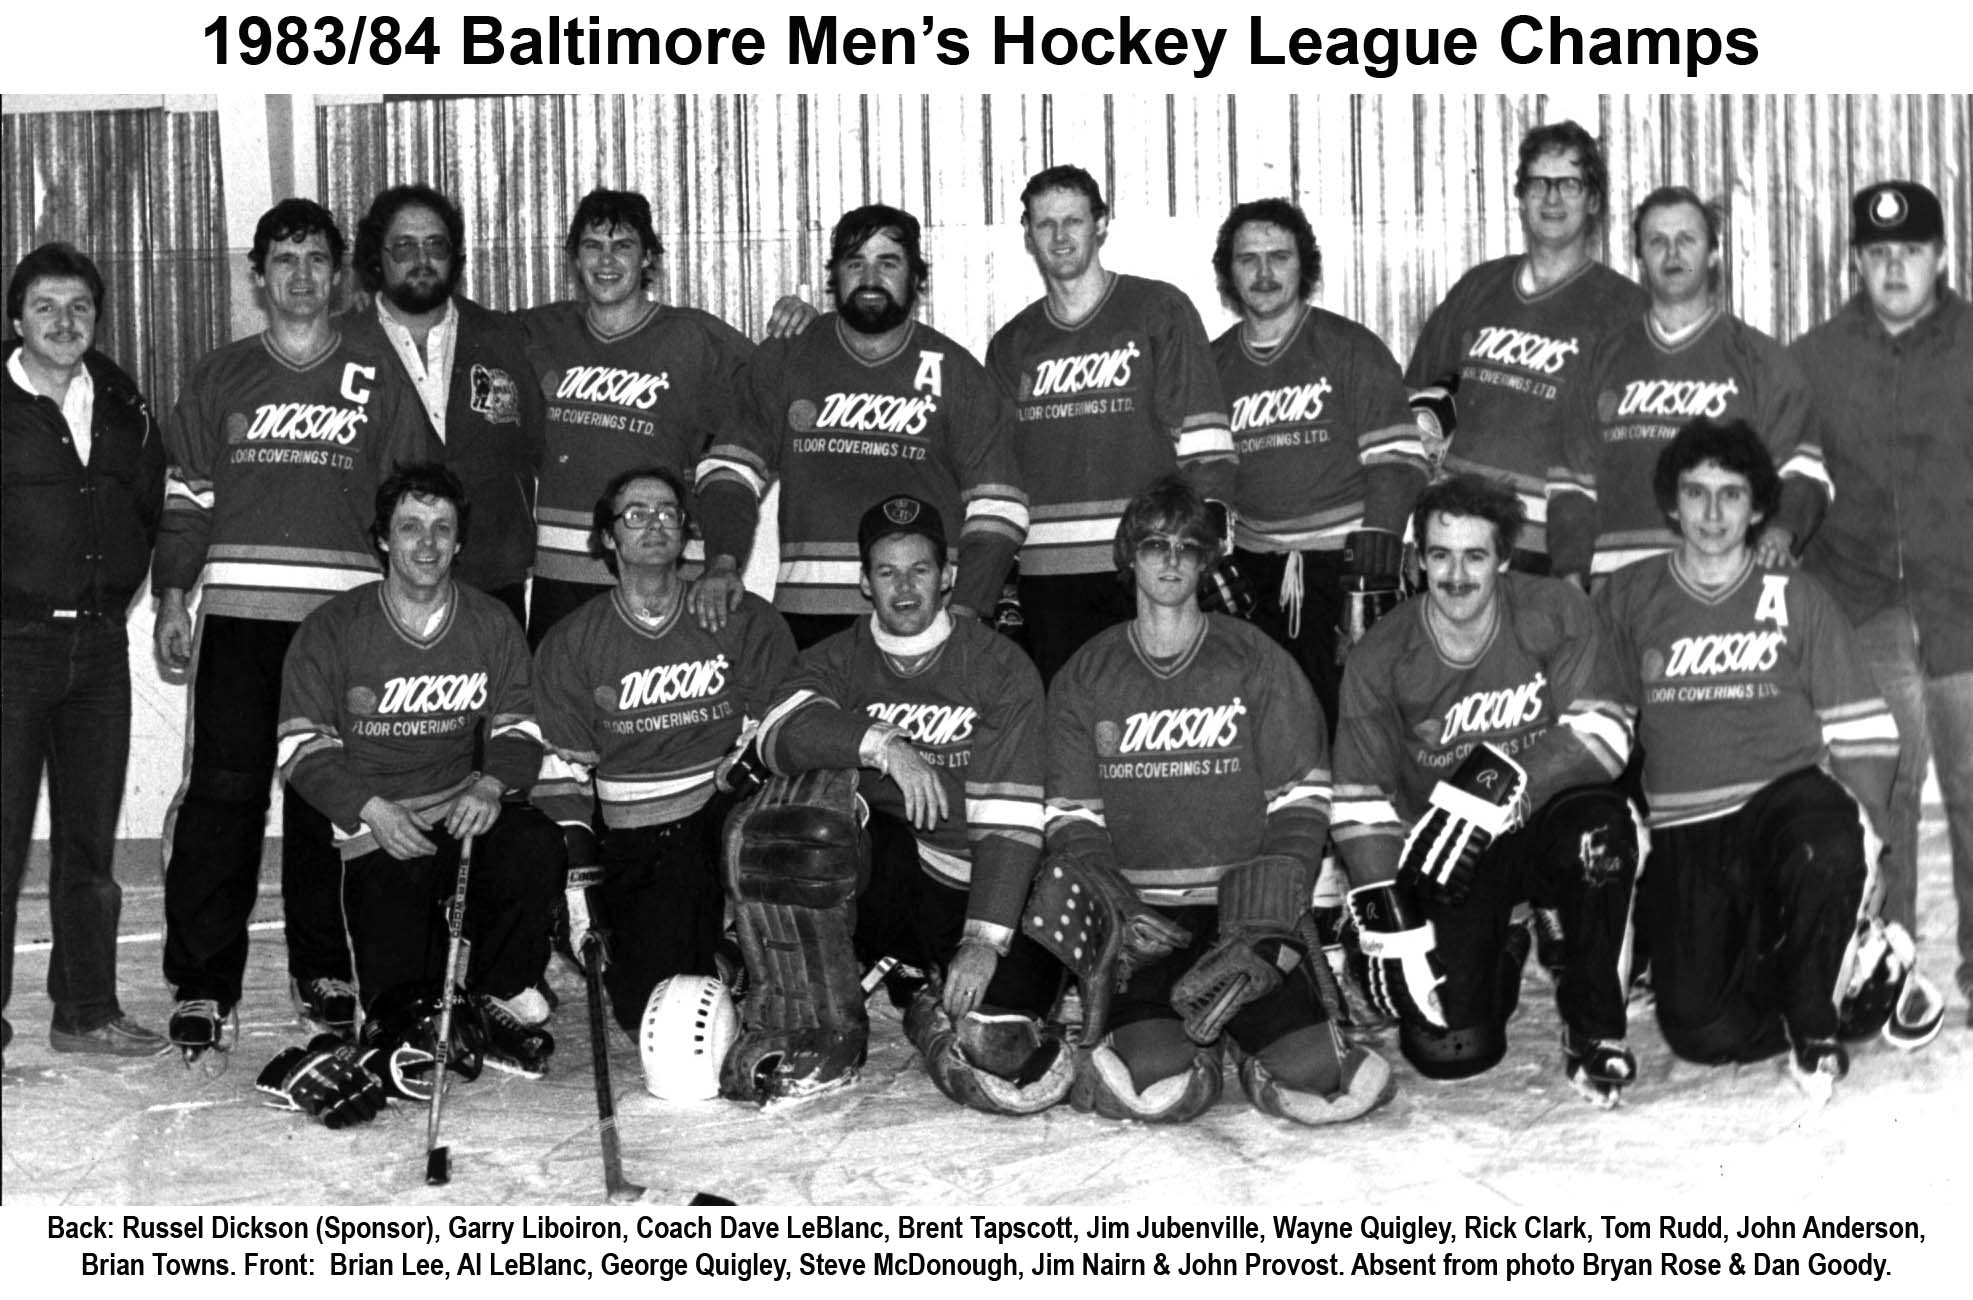 04JJ-1983-84 Baltimore Men's Hockey League